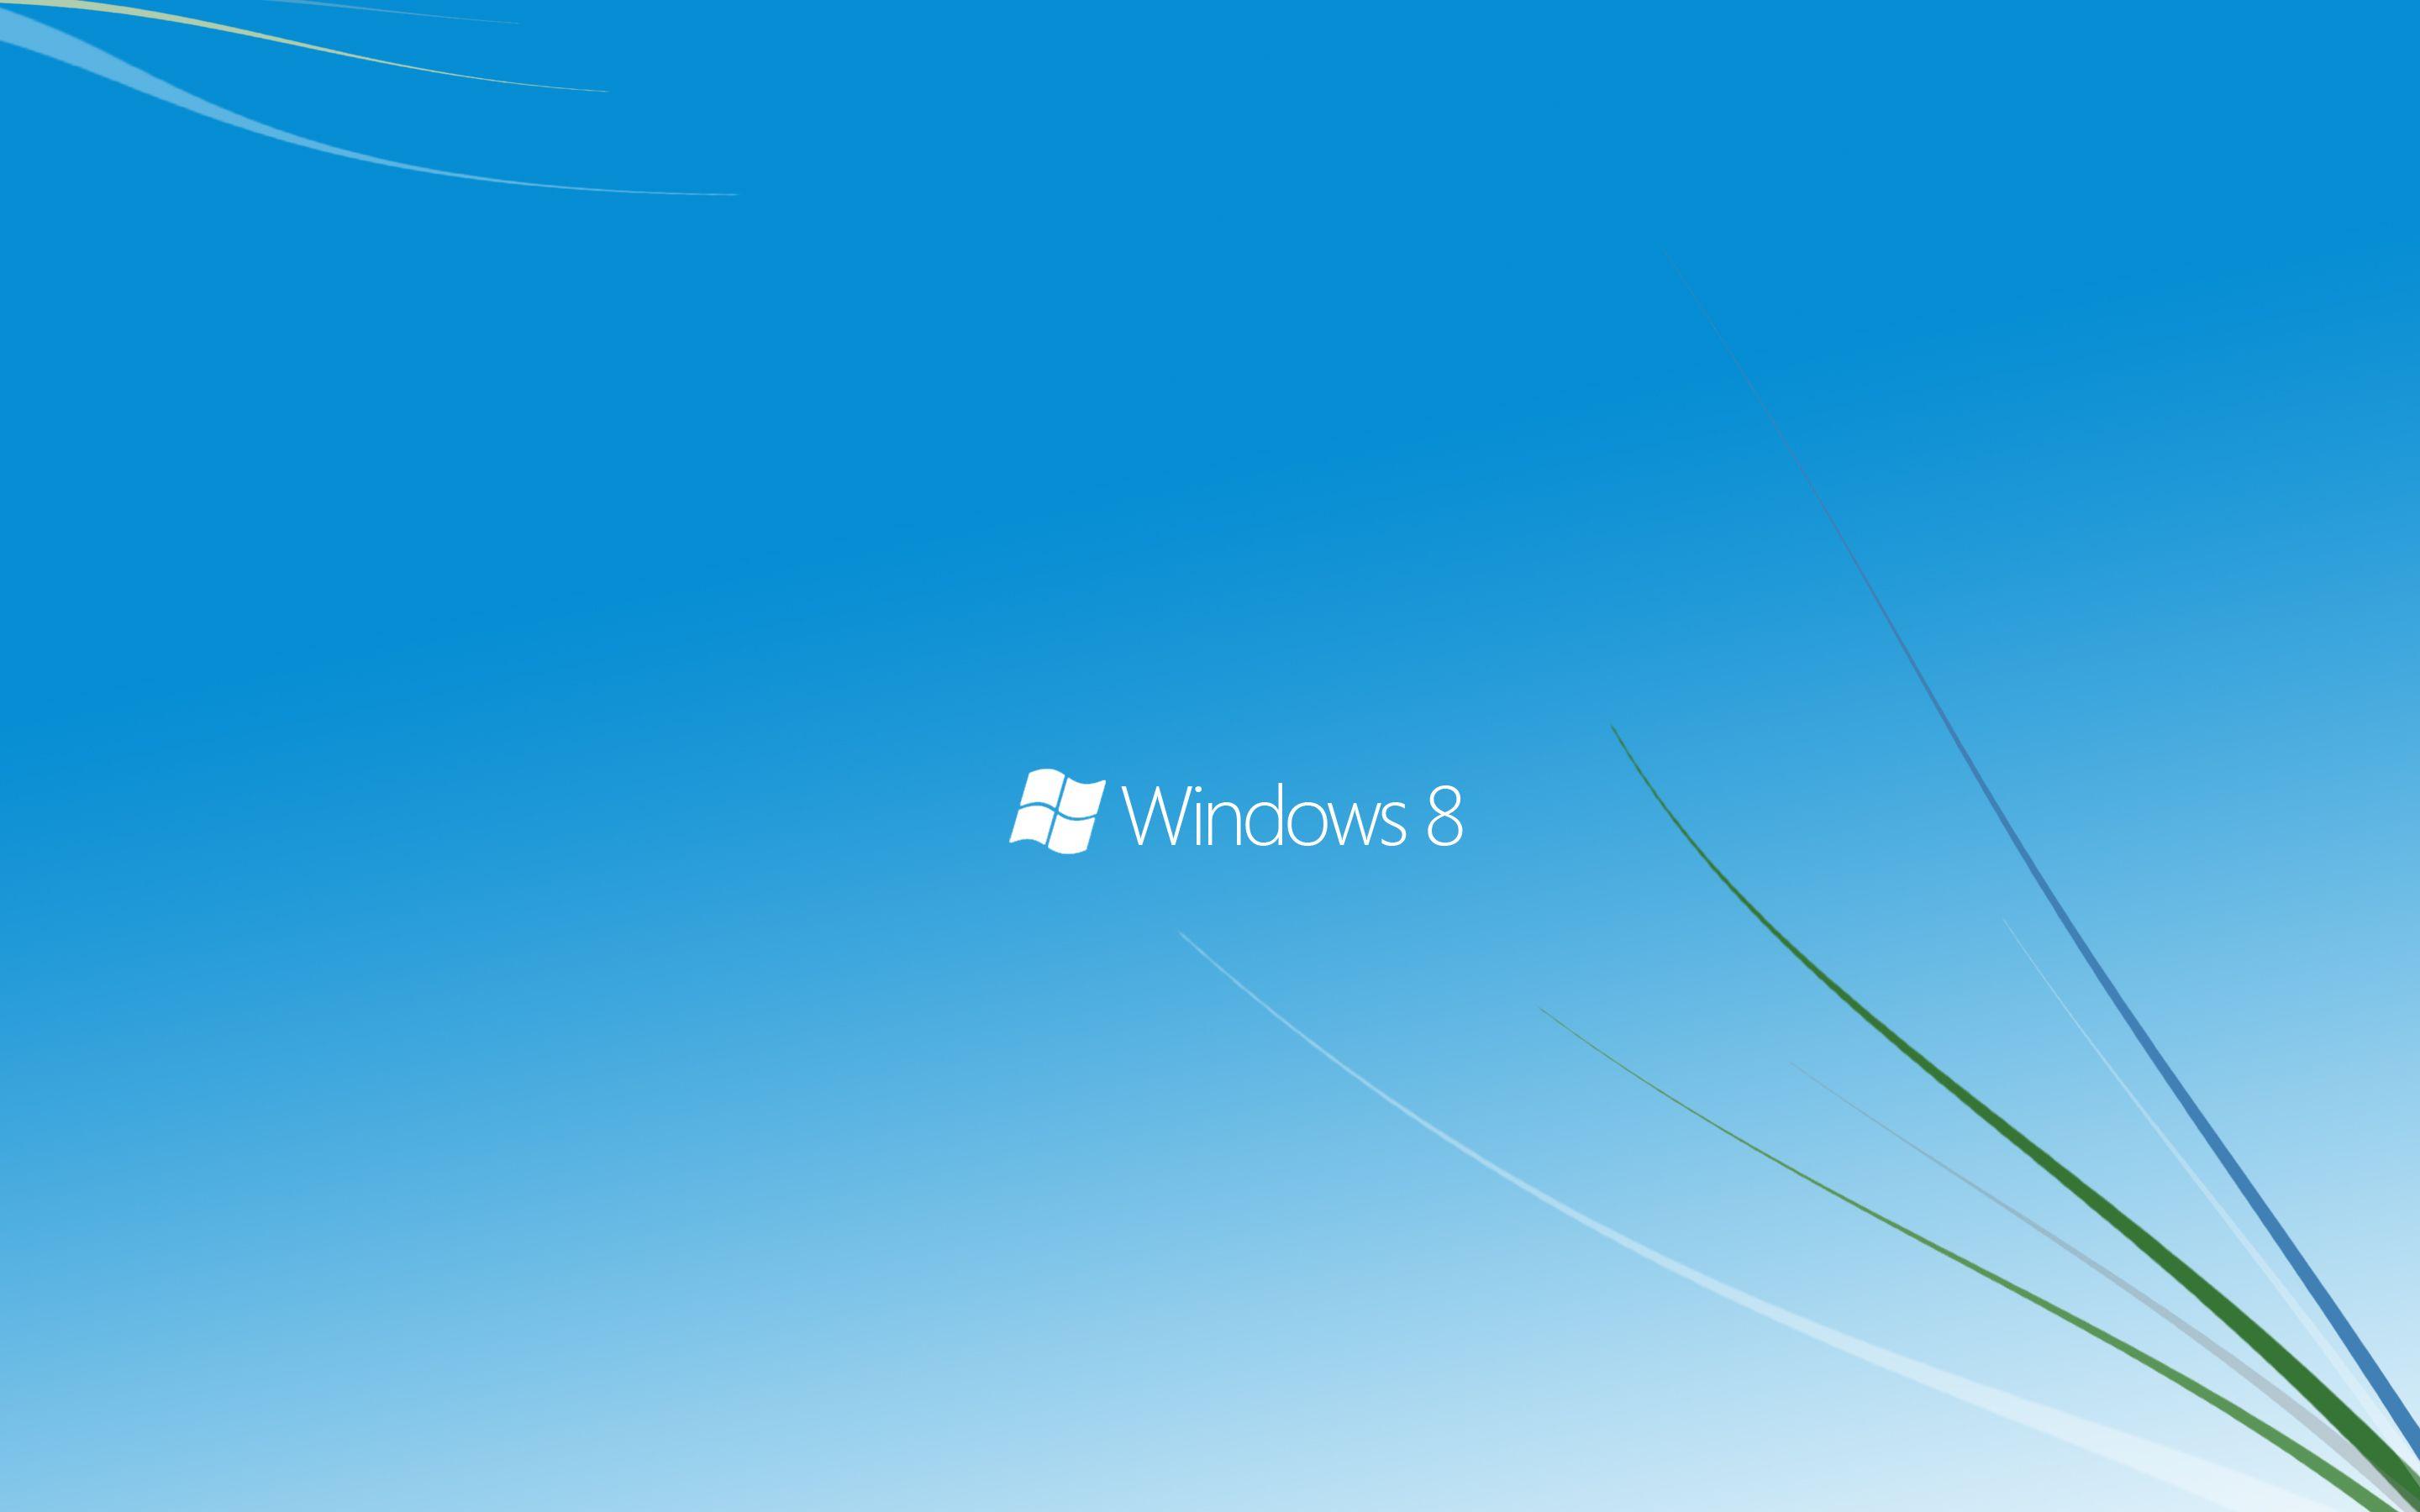 Blue Simple Windows 8 HD Desktop wallpaper. brands and logos